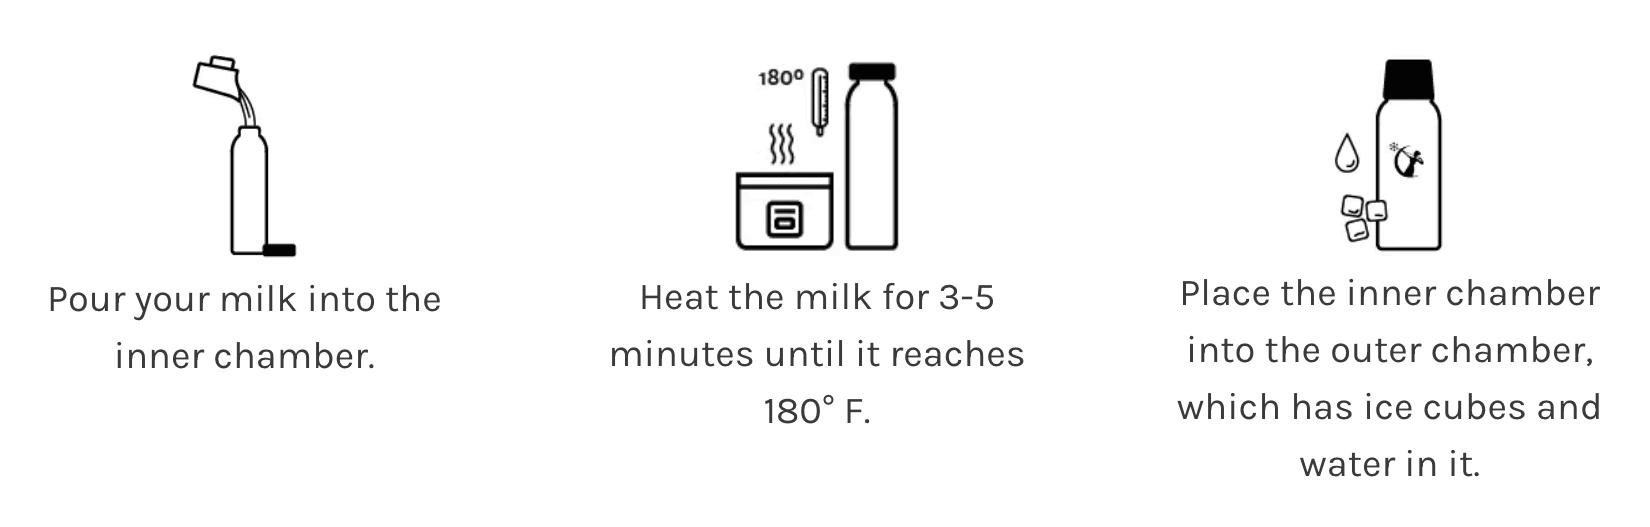 Heating Milk Instructions